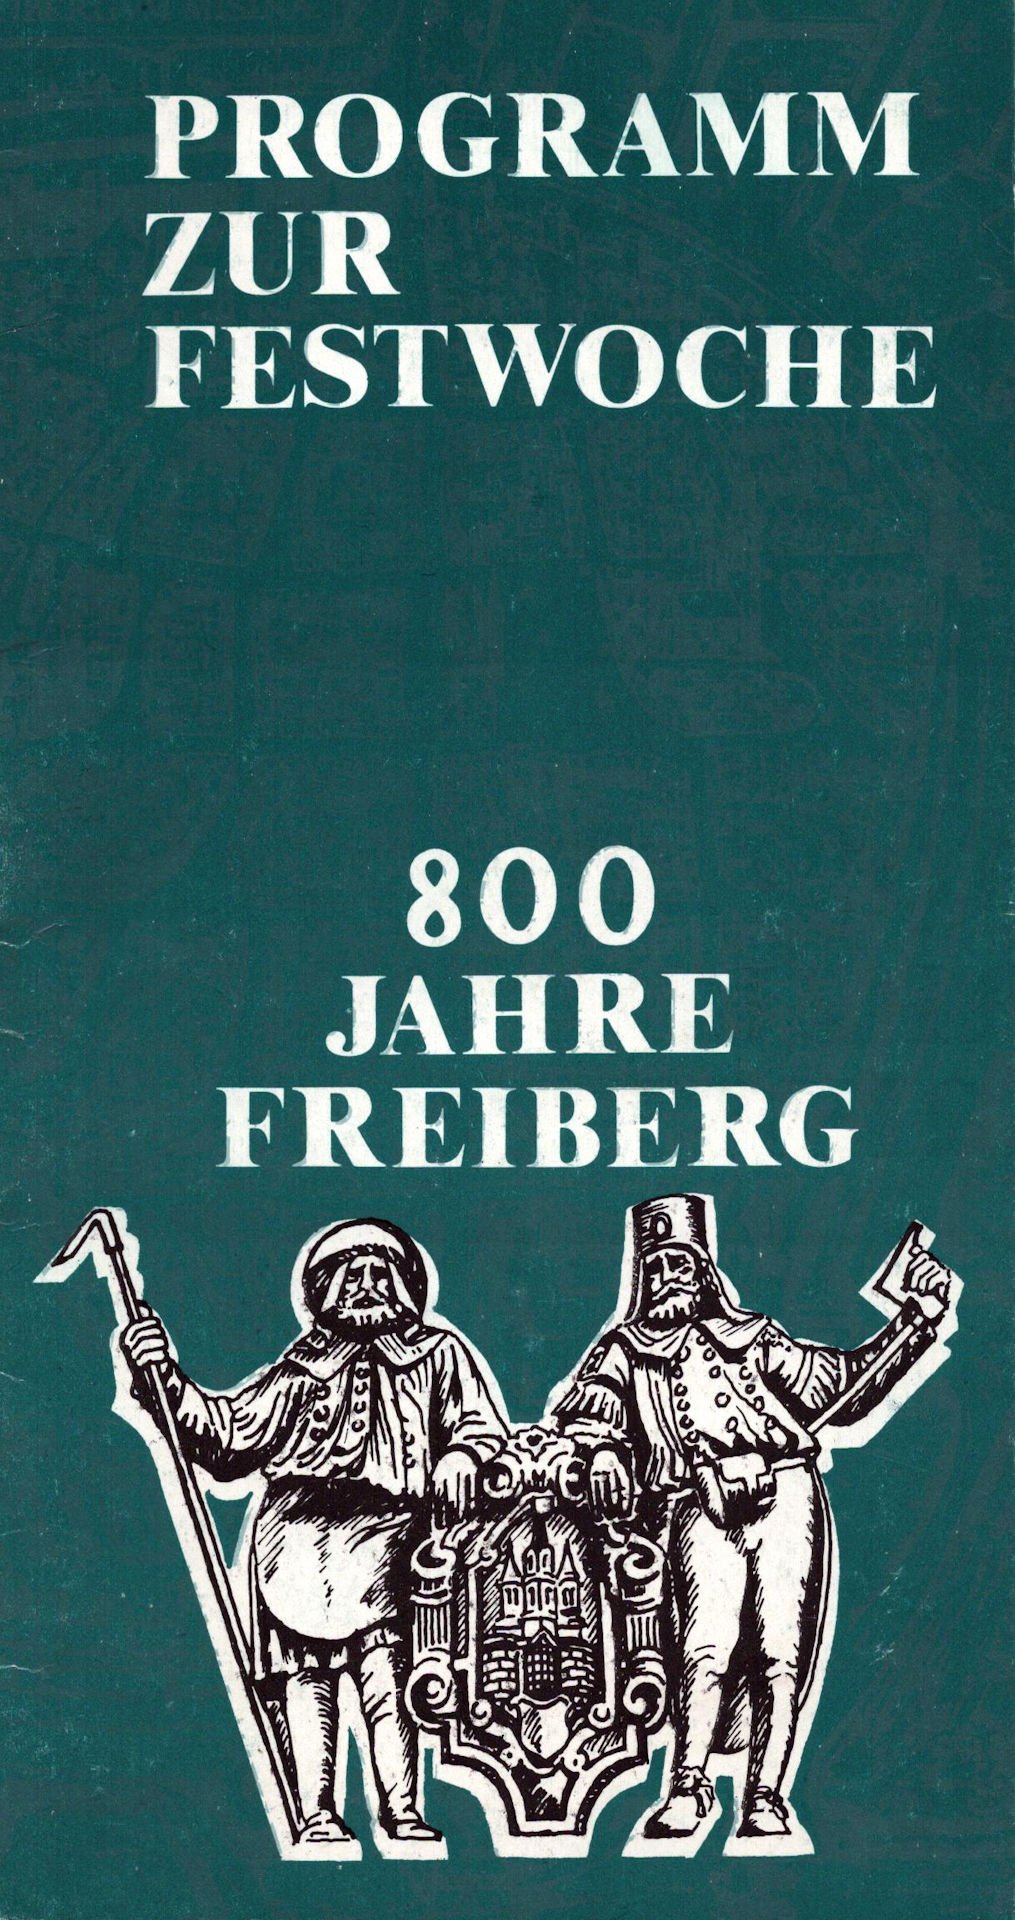 Originaltitel: Programm zur Festwoche - 800 Jahre Freiberg (Saxonia-Freiberg-Stiftung CC BY-NC-SA)